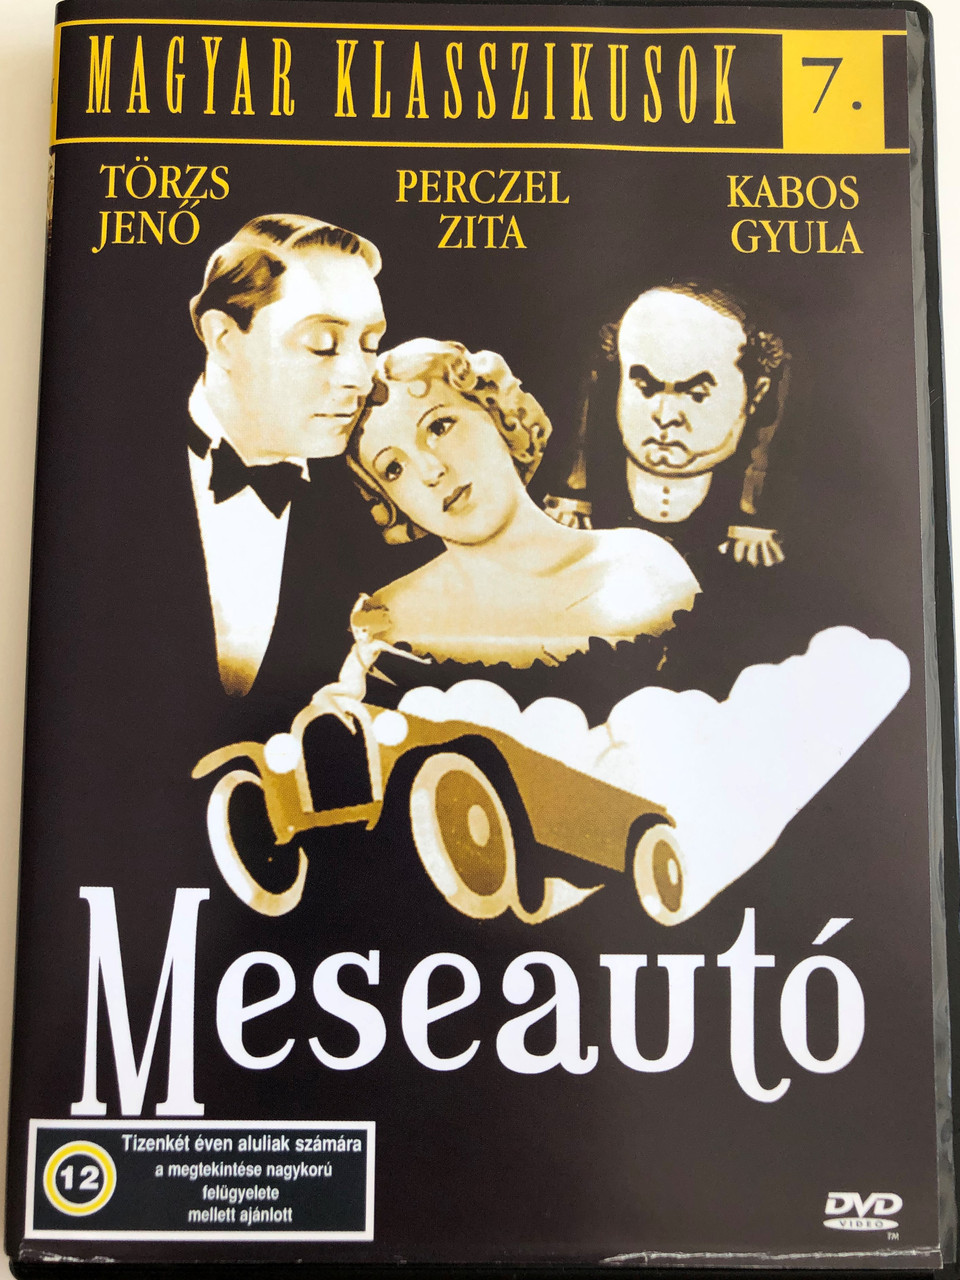 Meseautó DVD 1934 Dream Car / Directed by Gaál Béla / Starring: Perczel  Zita, Kabos Gyula, Törzs Jenő / Magyar Klasszikusok 7. / Hungarian Black &  White Classic - bibleinmylanguage